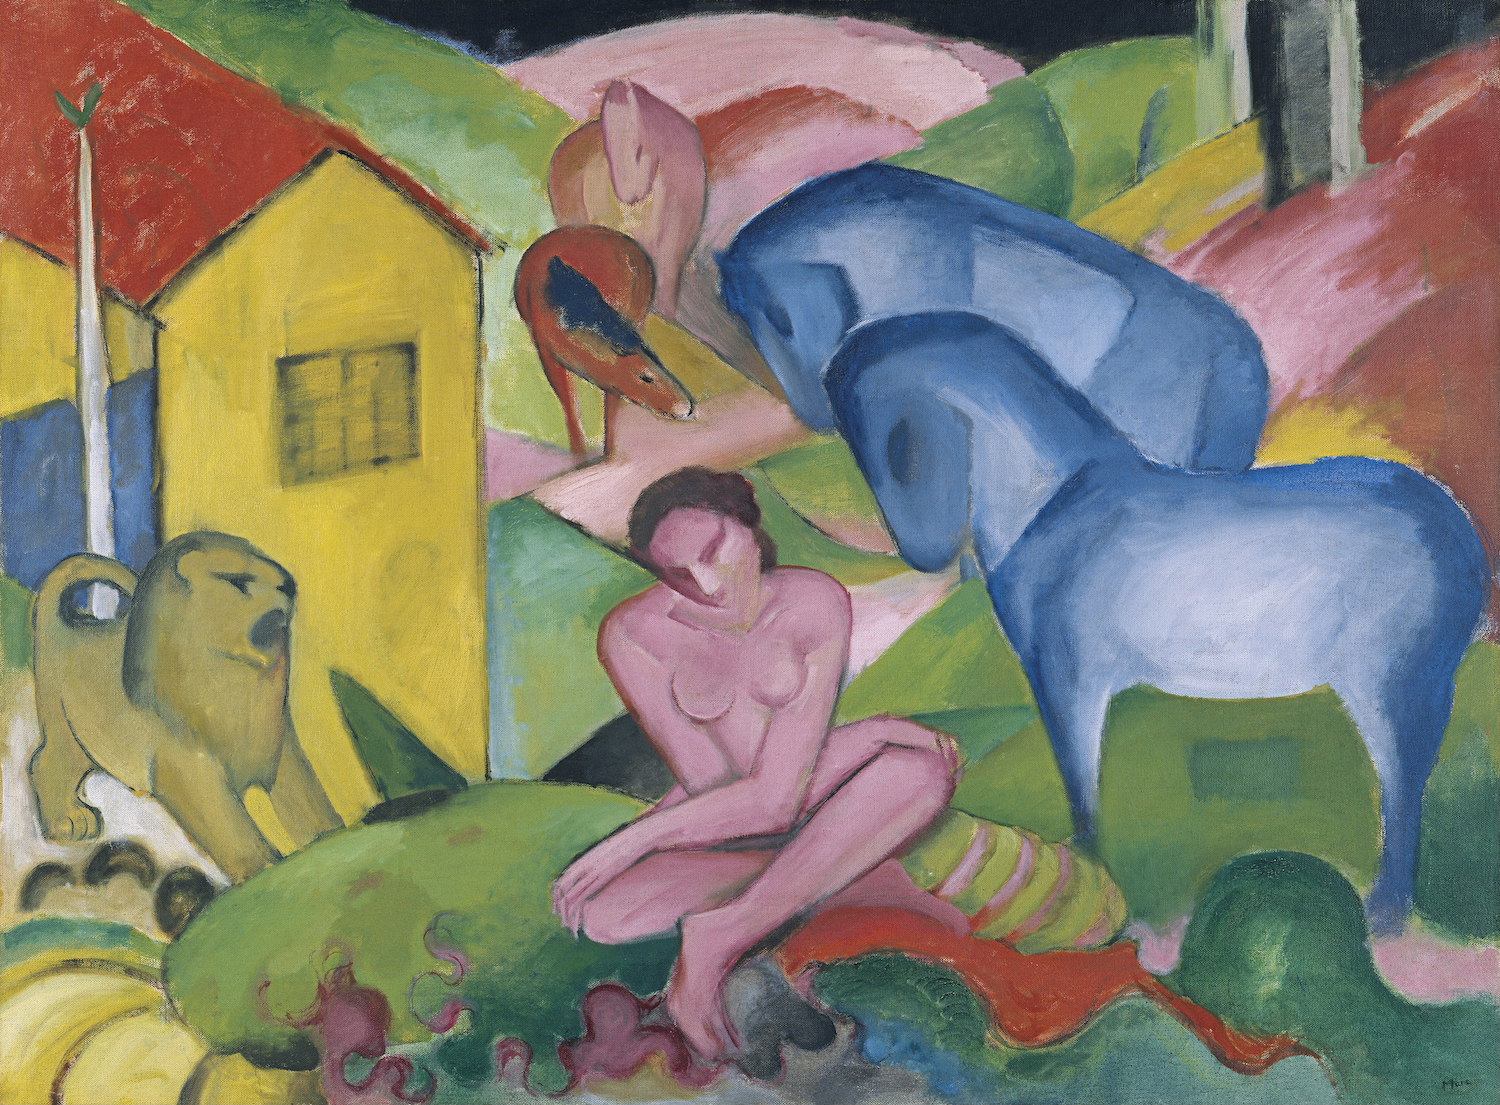 Il sogno by Franz Marc - 1912 - 135 x 100,5 cm 